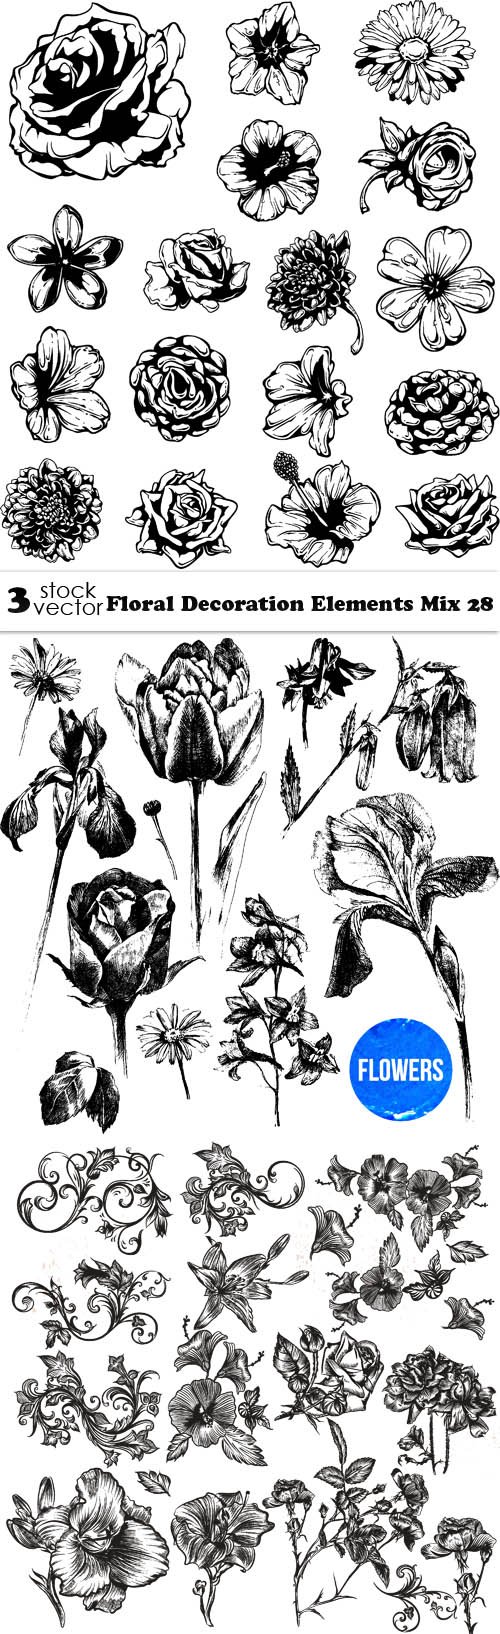 Vectors - Floral Decoration Elements Mix 28